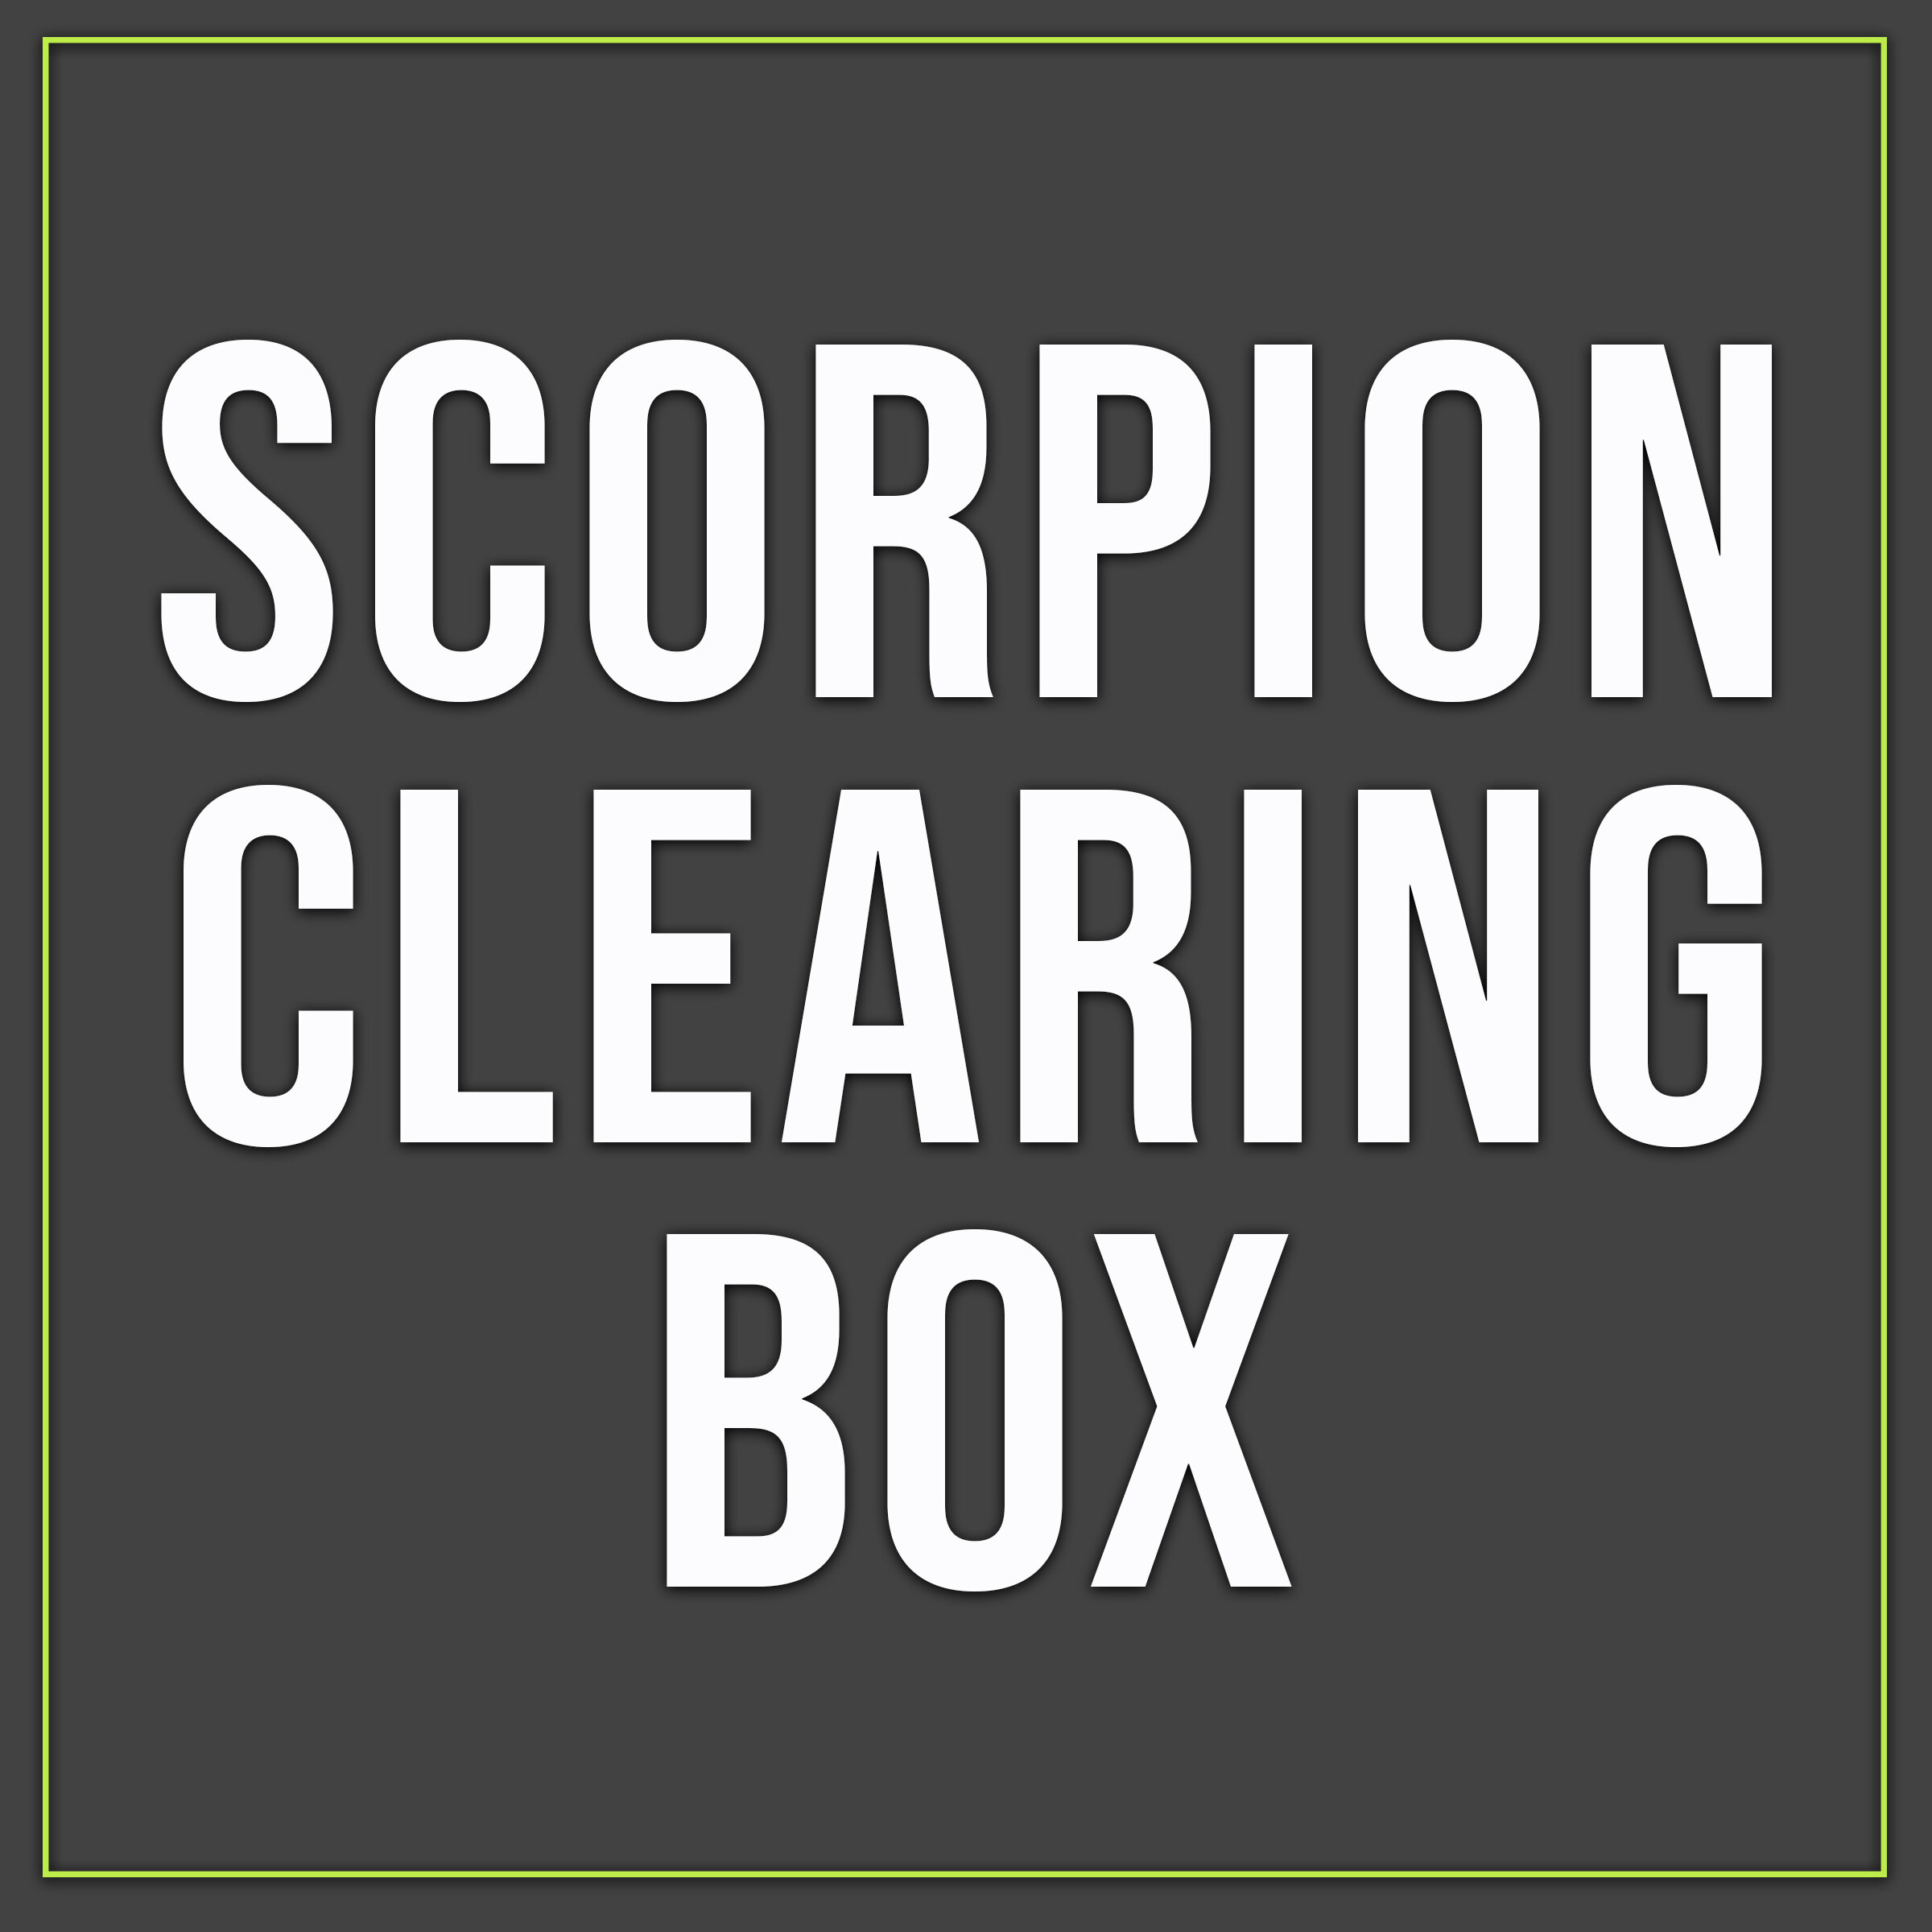 Scorpion Clearing Box.jpg